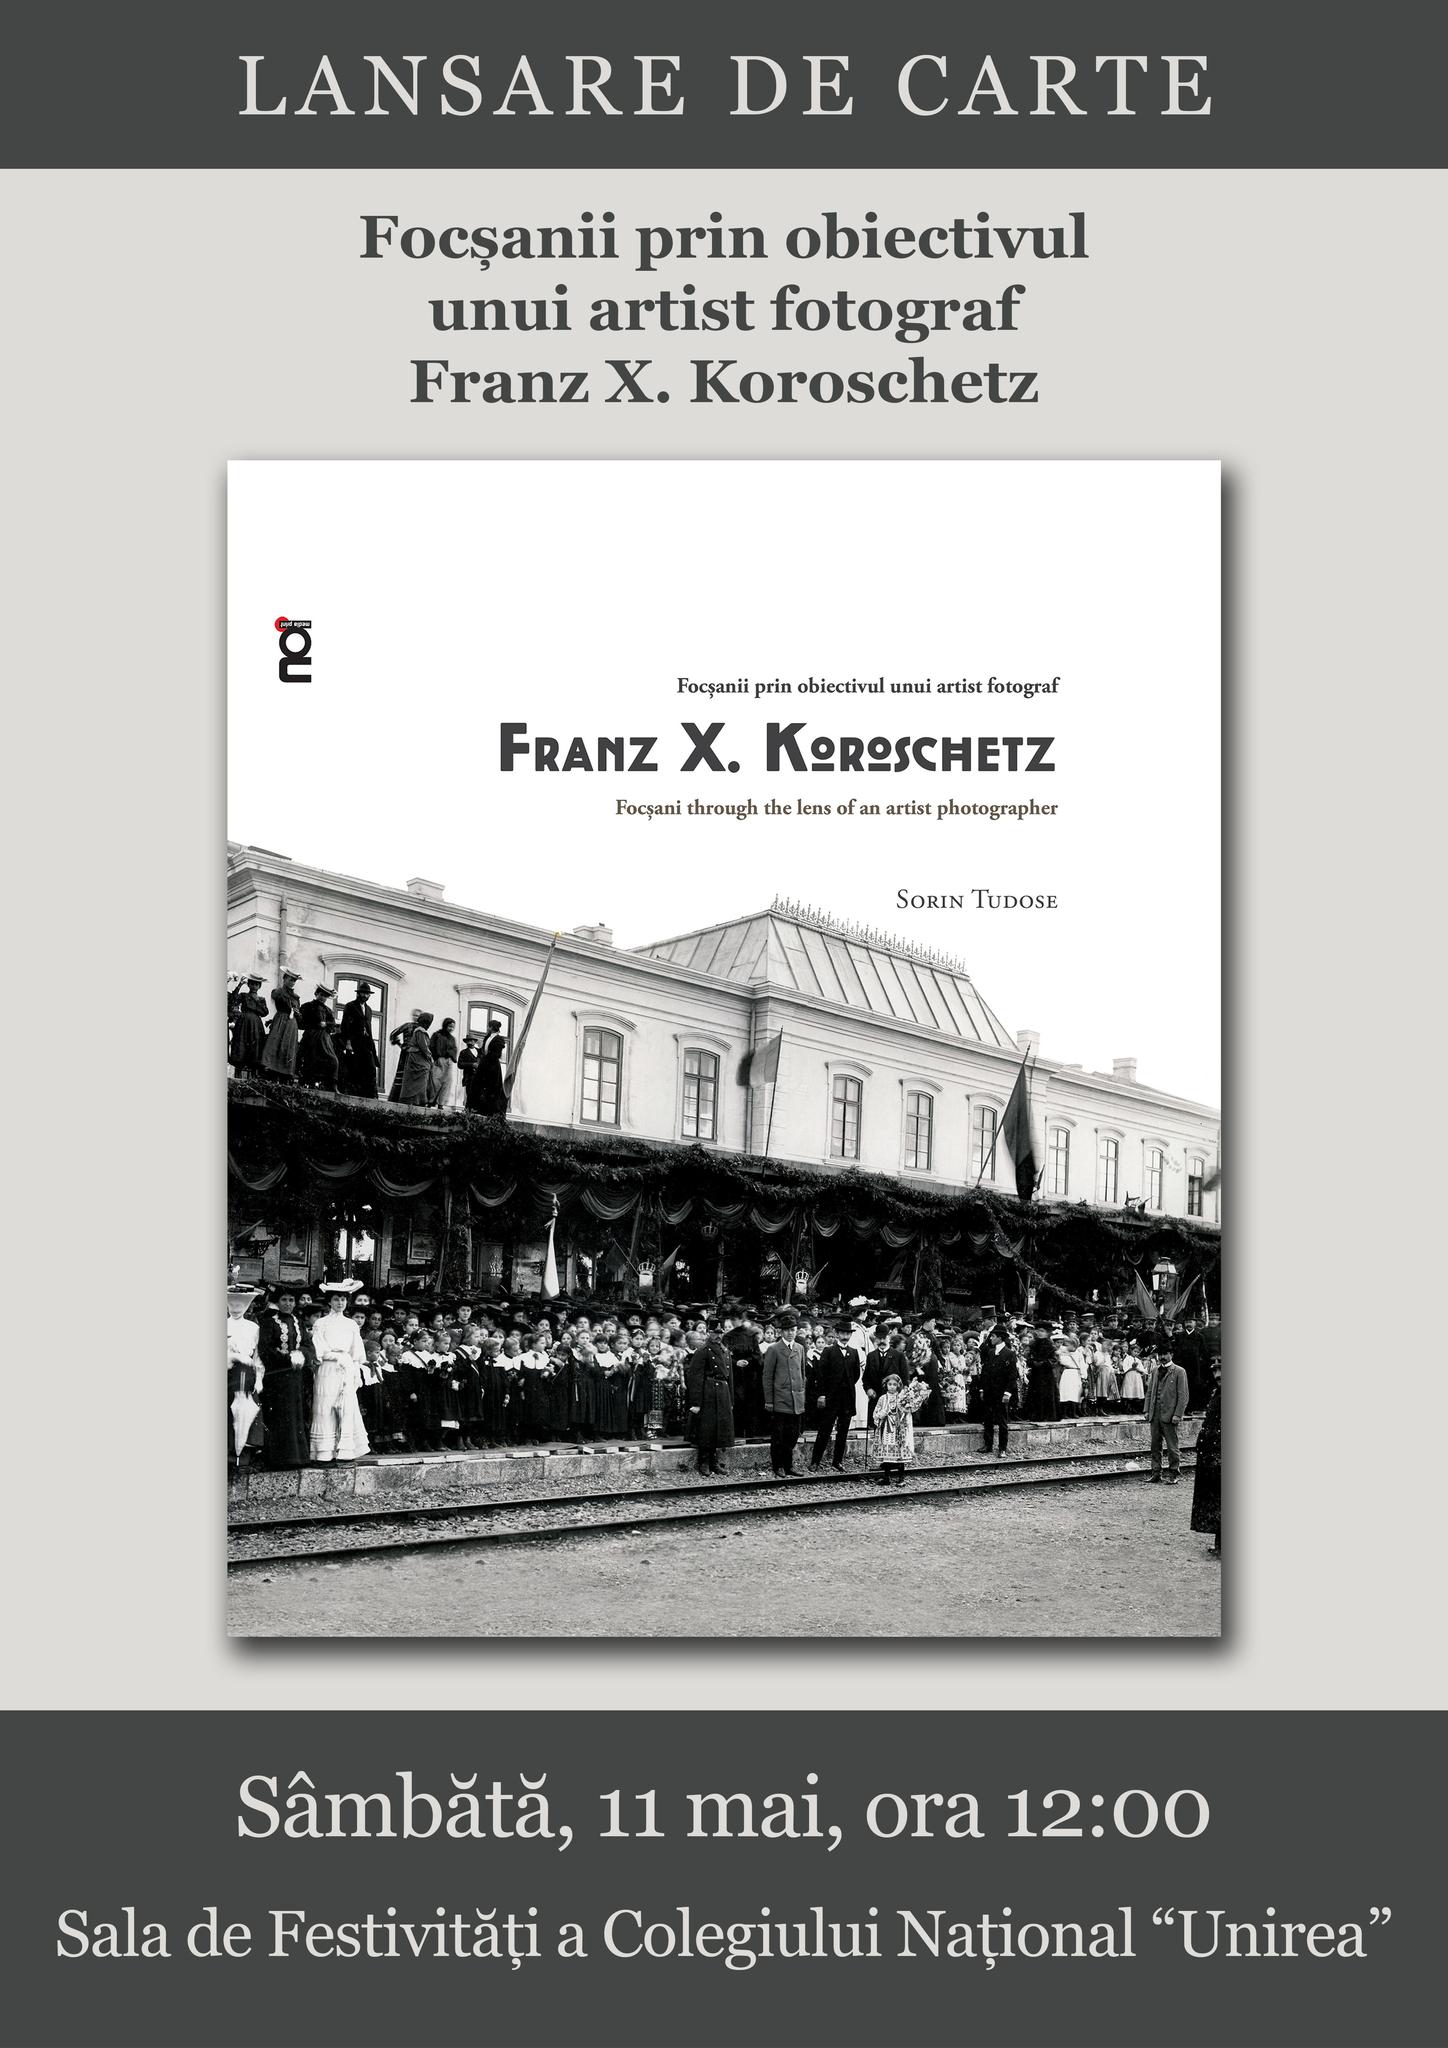 Lansare de carte - Focșanii prin obiectivul unui artist fotograf - Franz X. Koroschetz